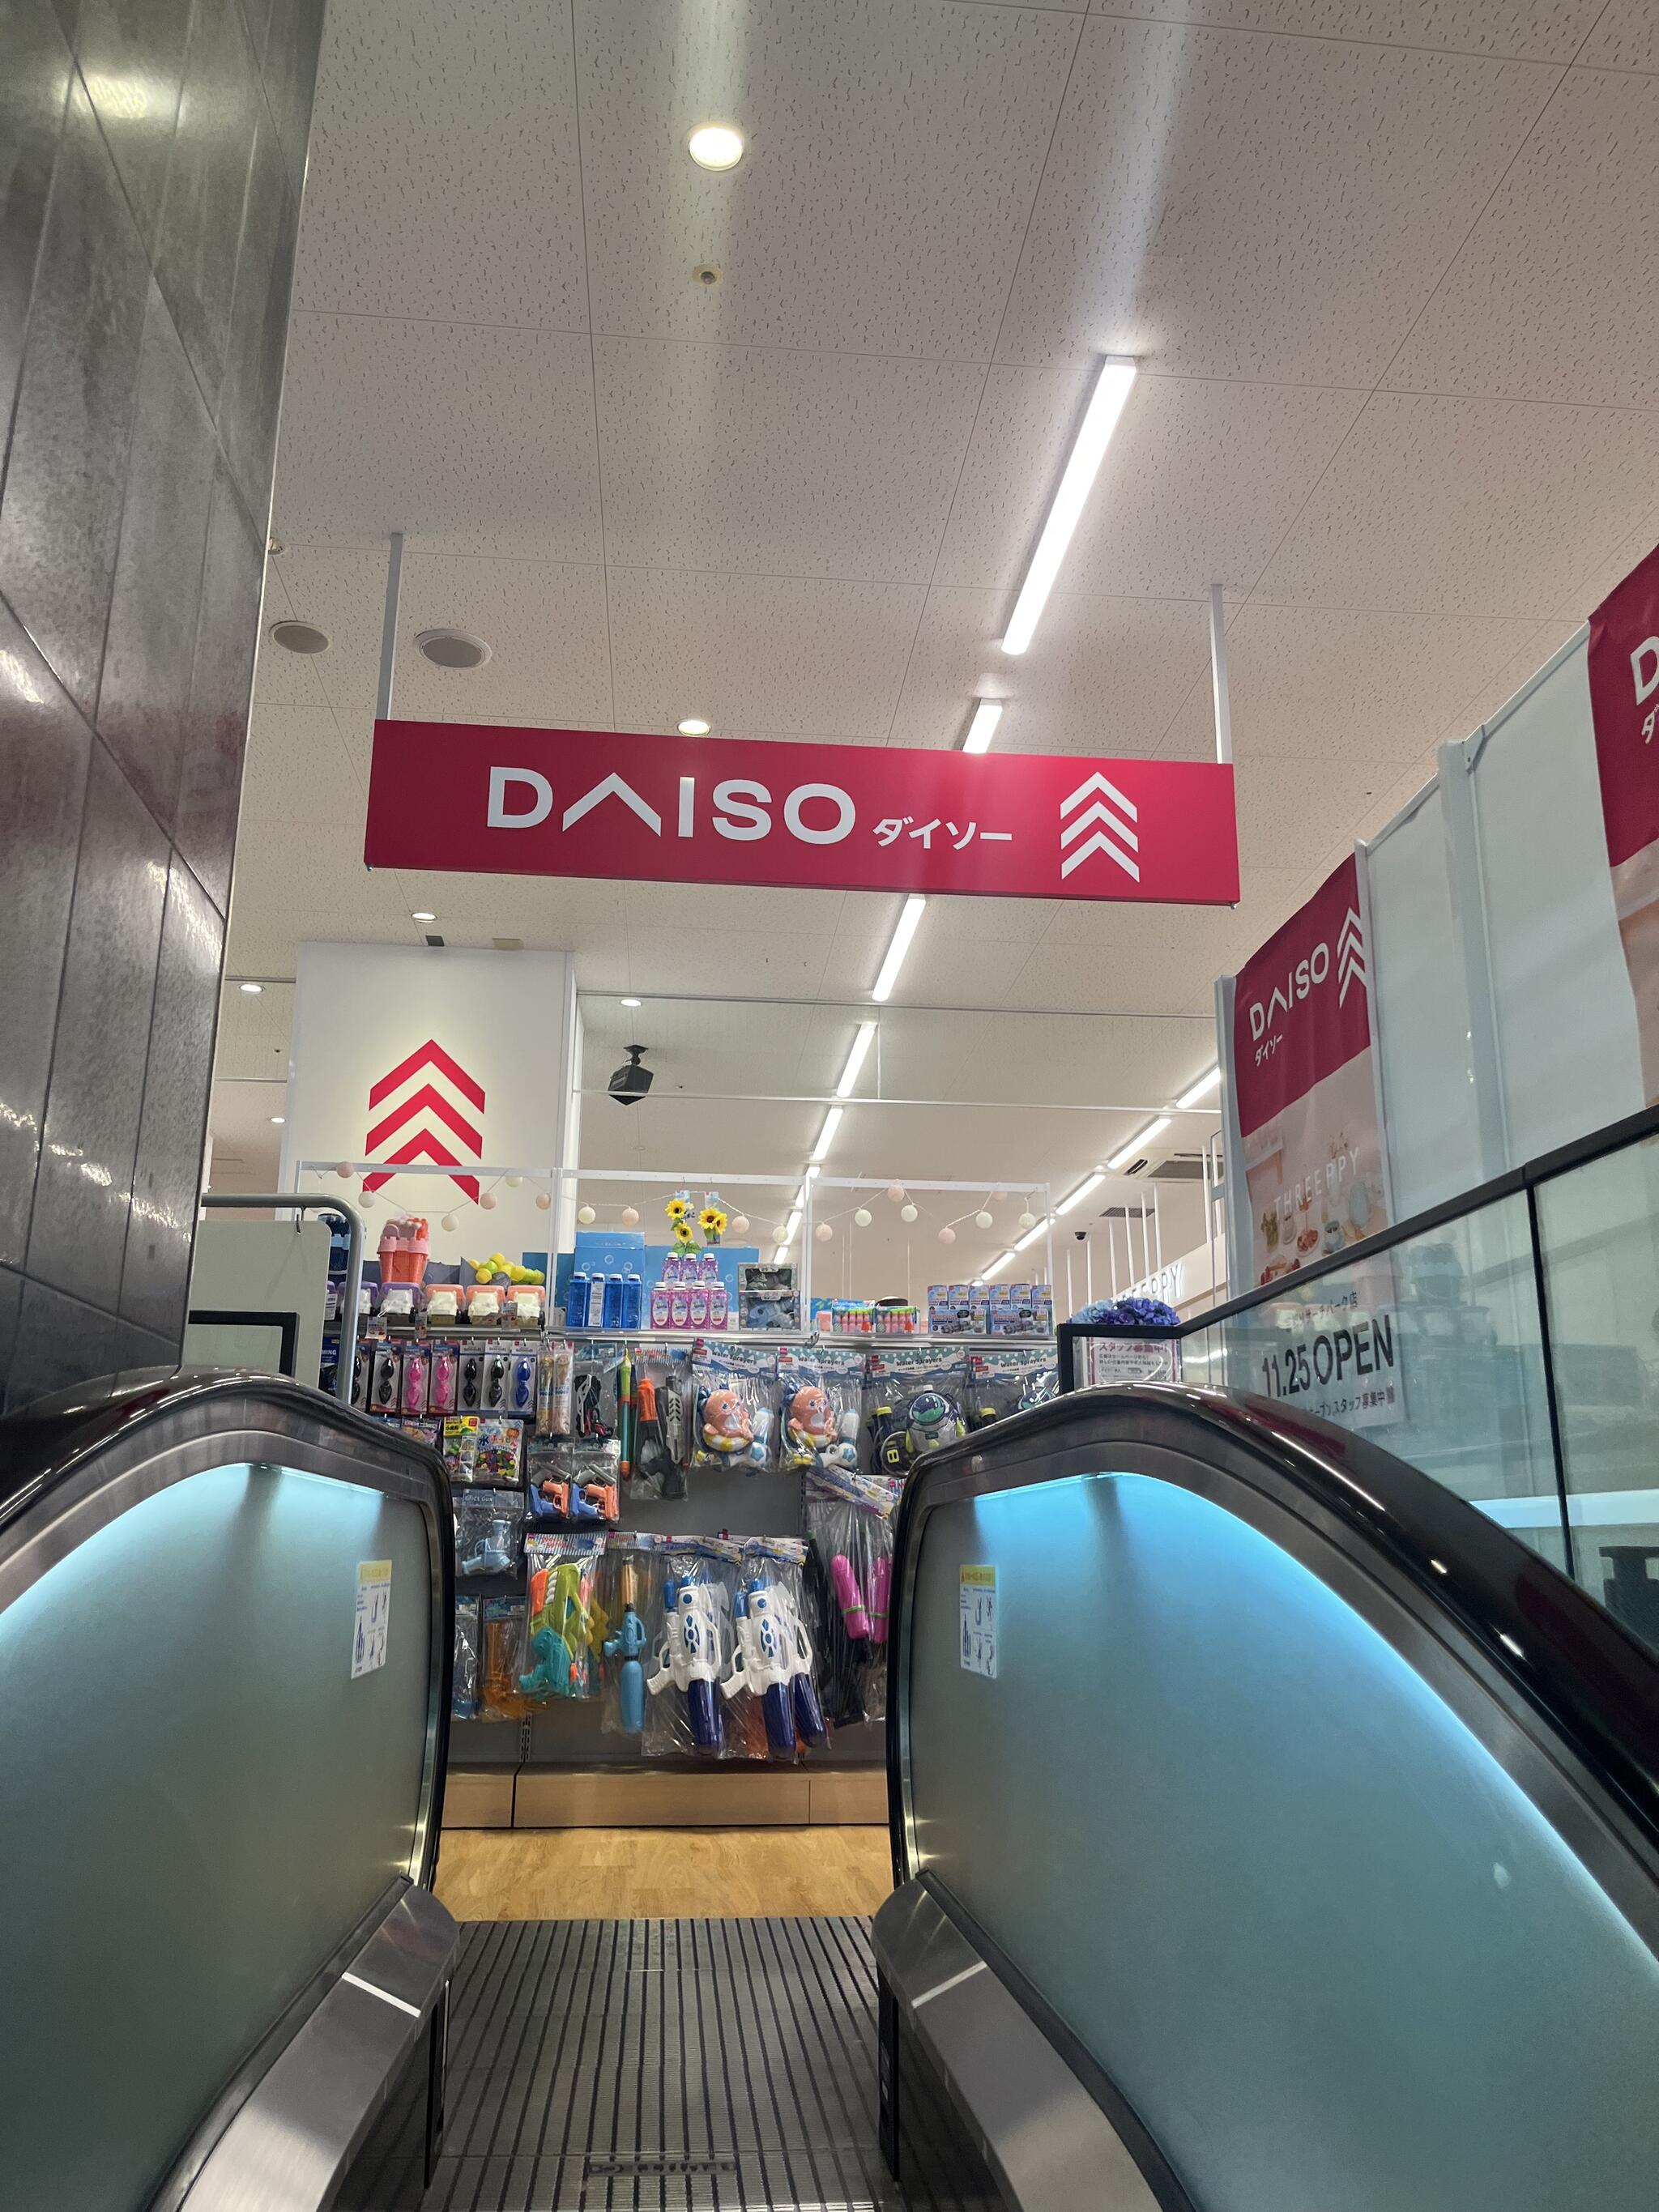 DAISO 京都リサーチパーク店の代表写真4